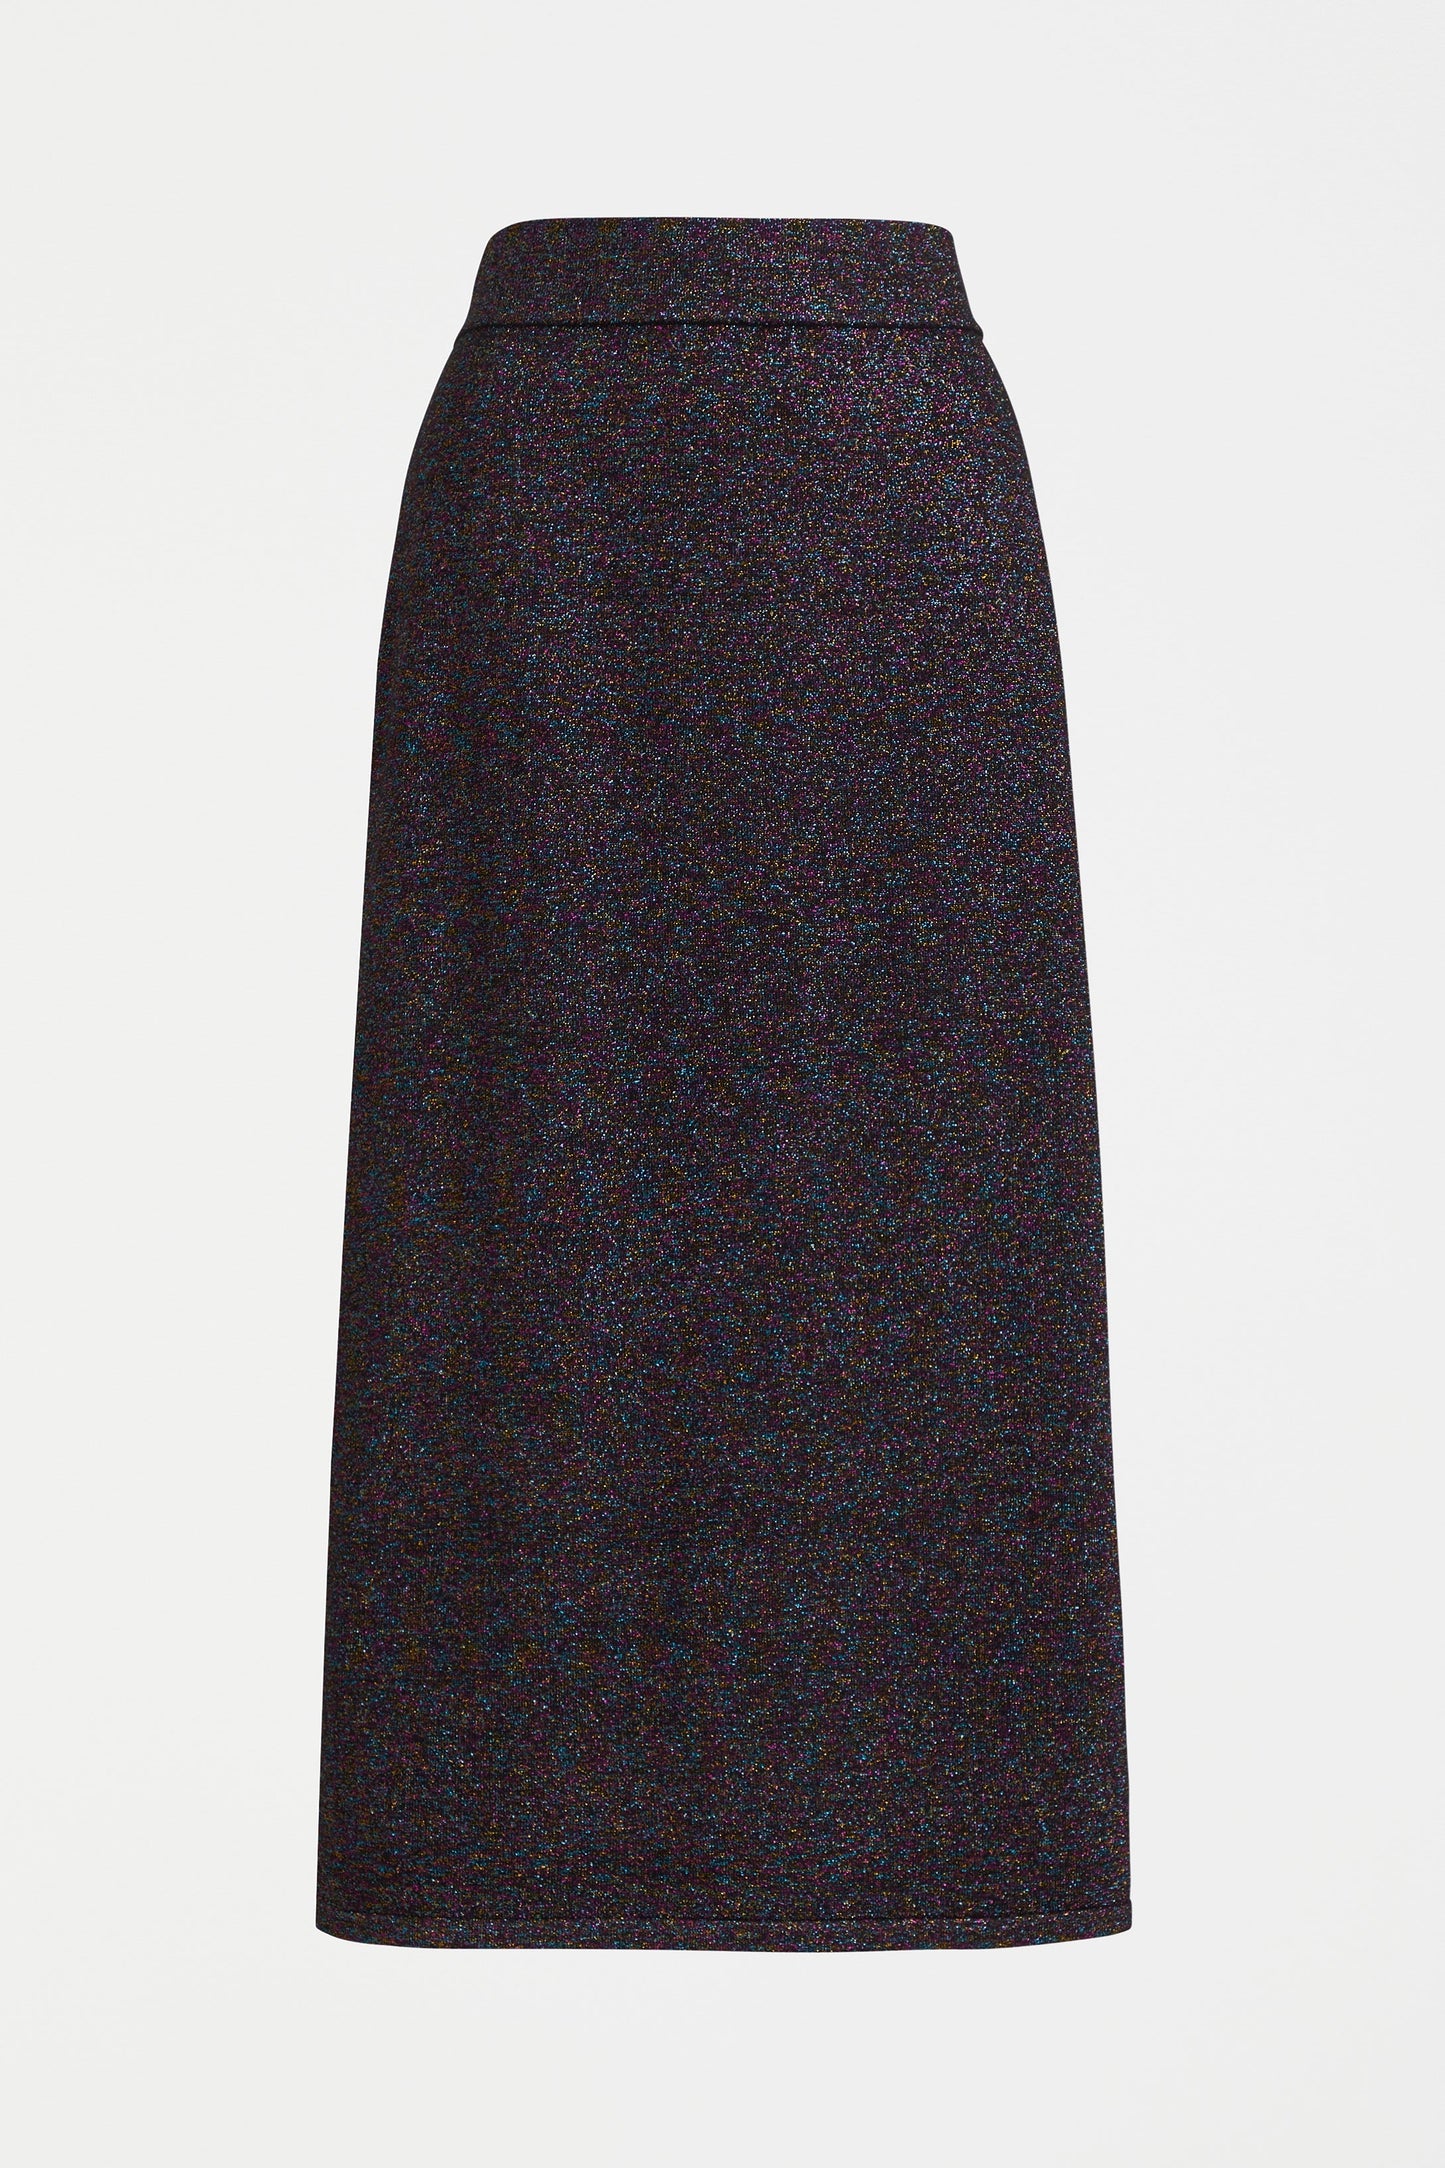 Galaxy Metallic Thread Knit Pencil Skirt Front | BLACK MULTI METALLIC